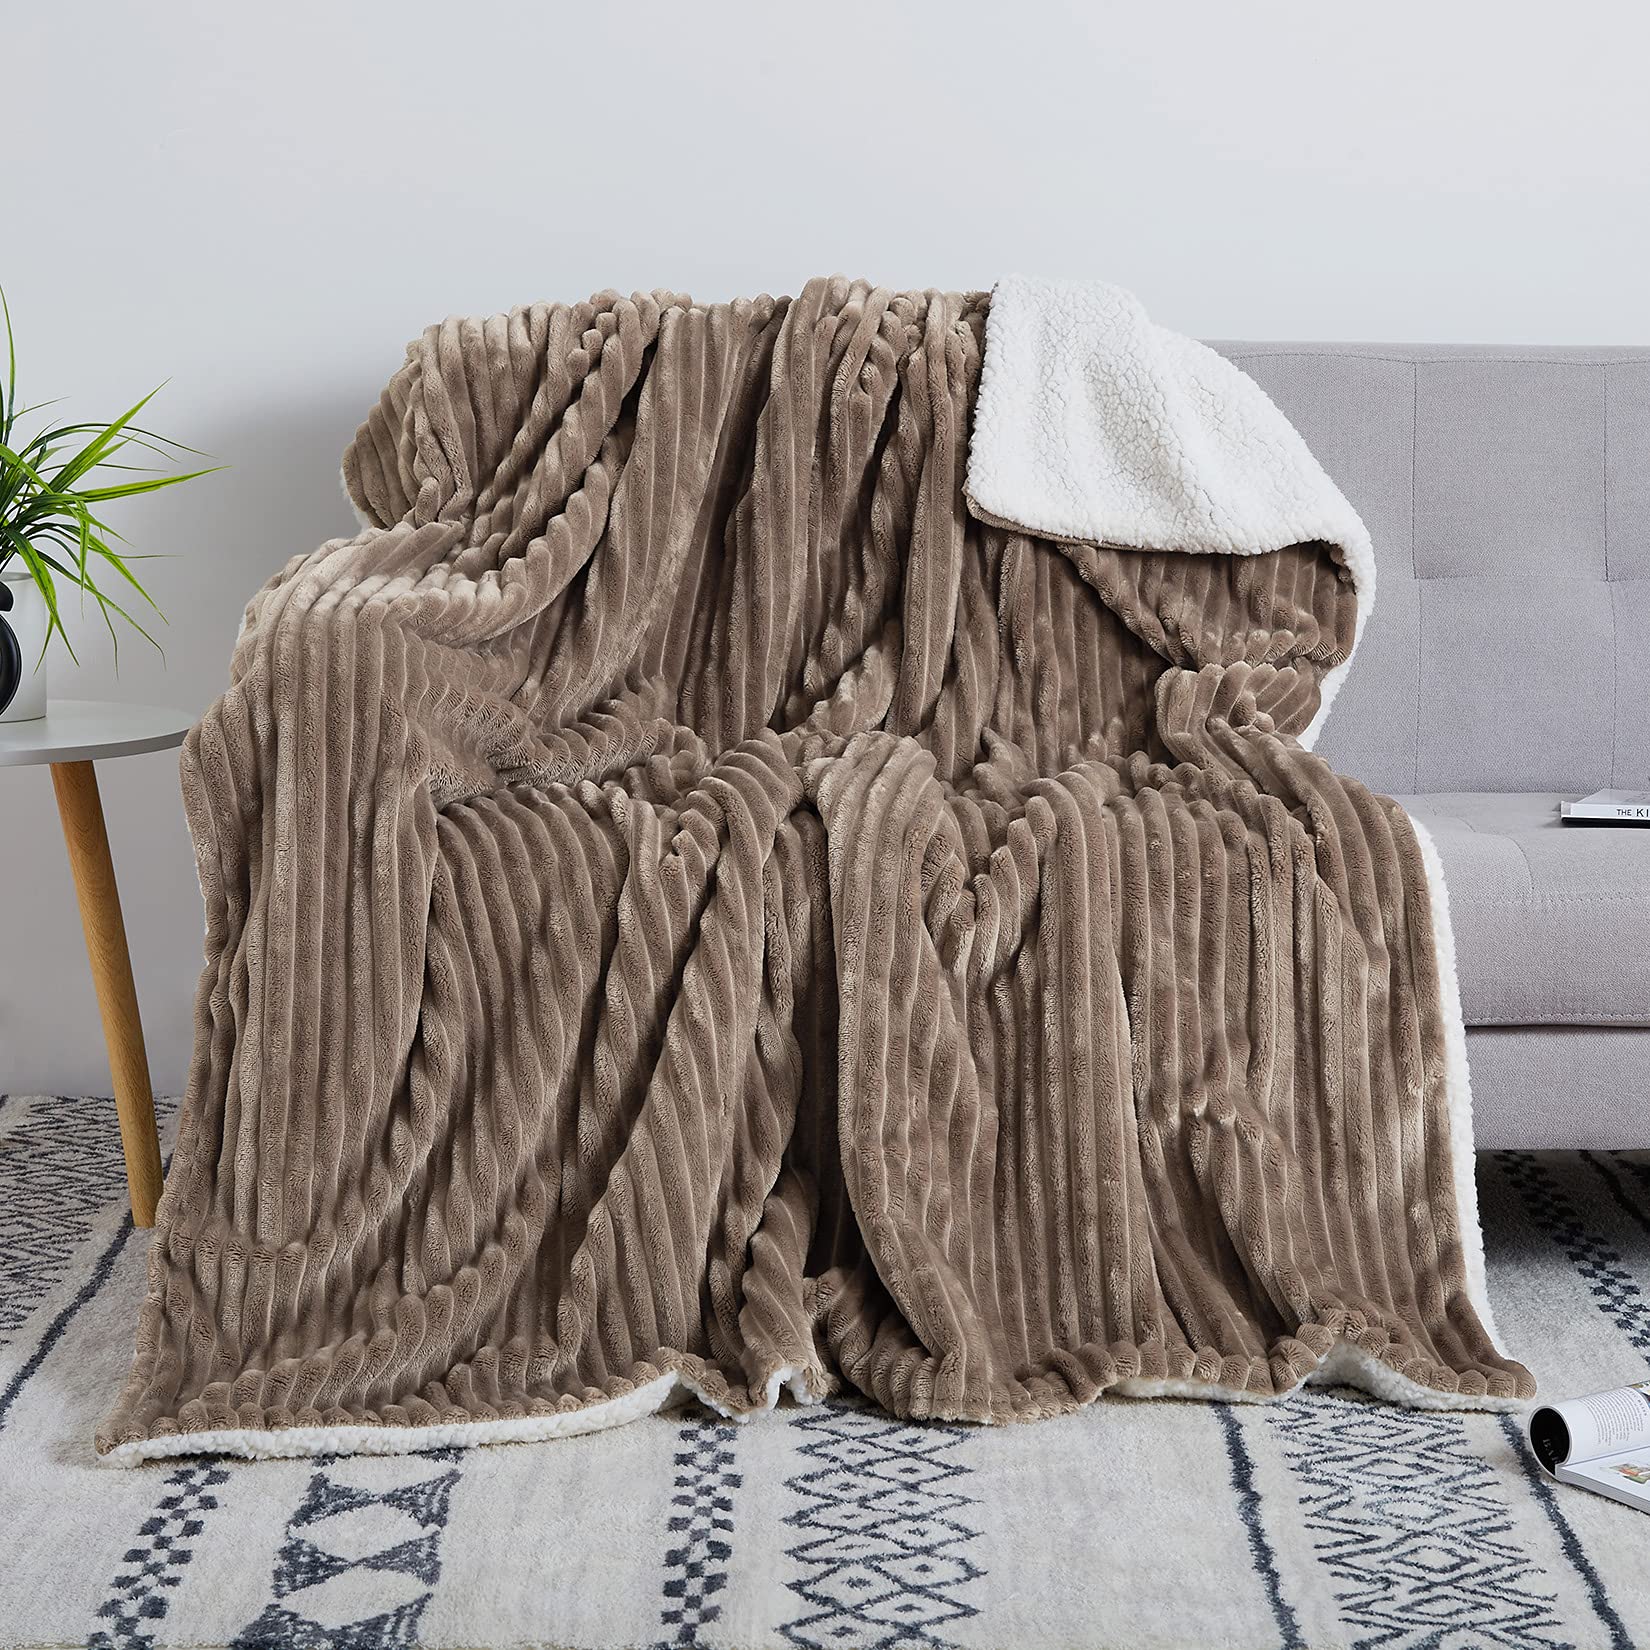 CAROMIO Sherpa Fleece Soft Plush Jacquard Fluffy Throw Blanket